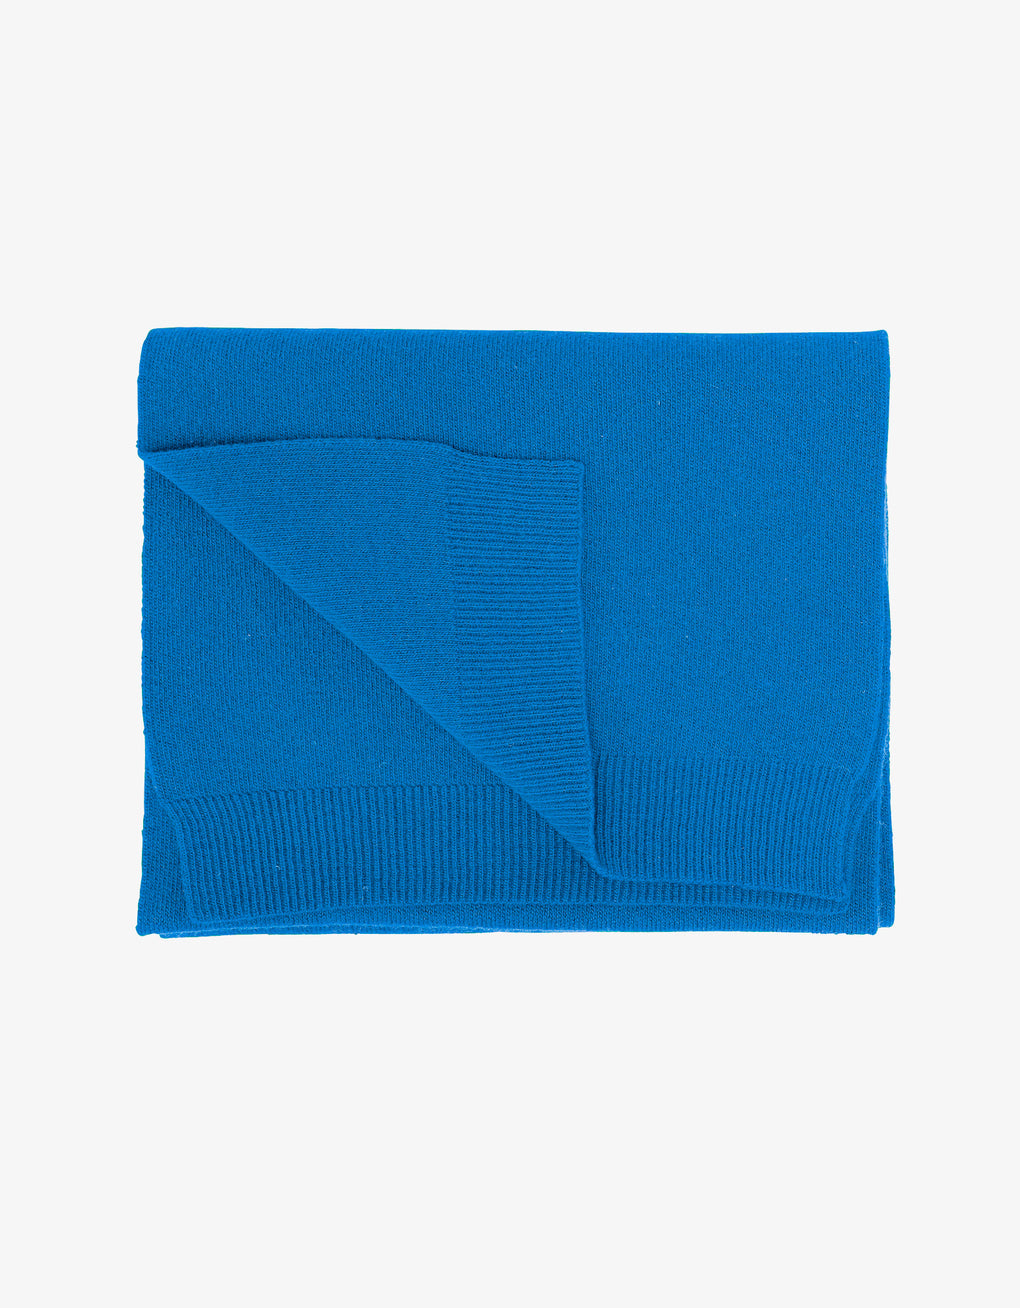 Merino wool scarf - pacific blue